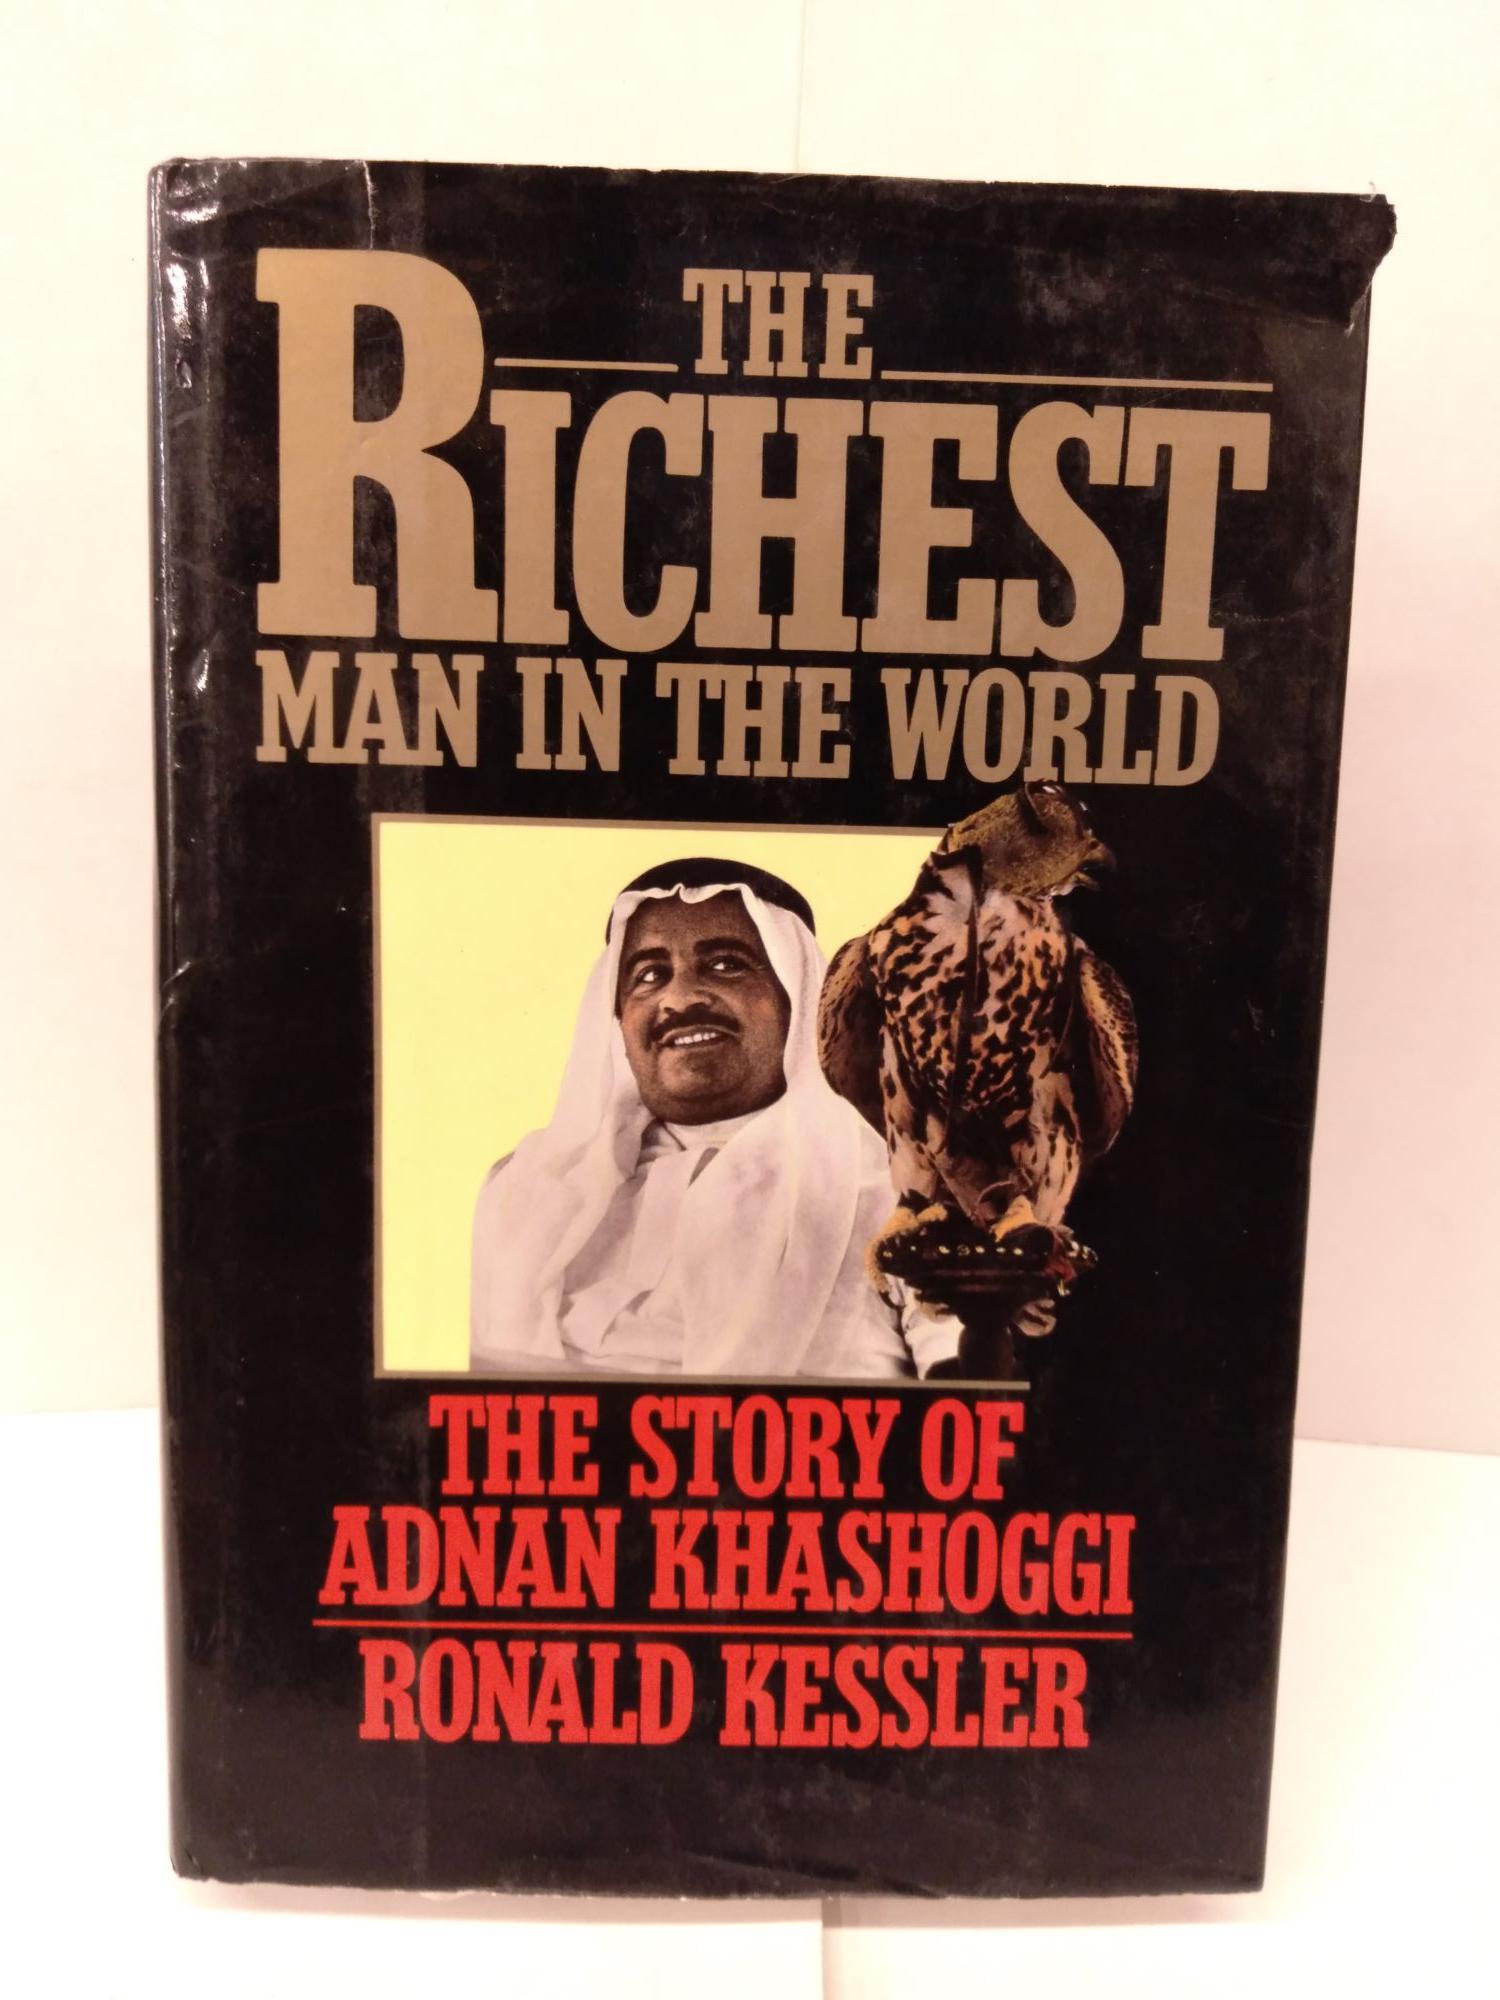 1st richest man in the world